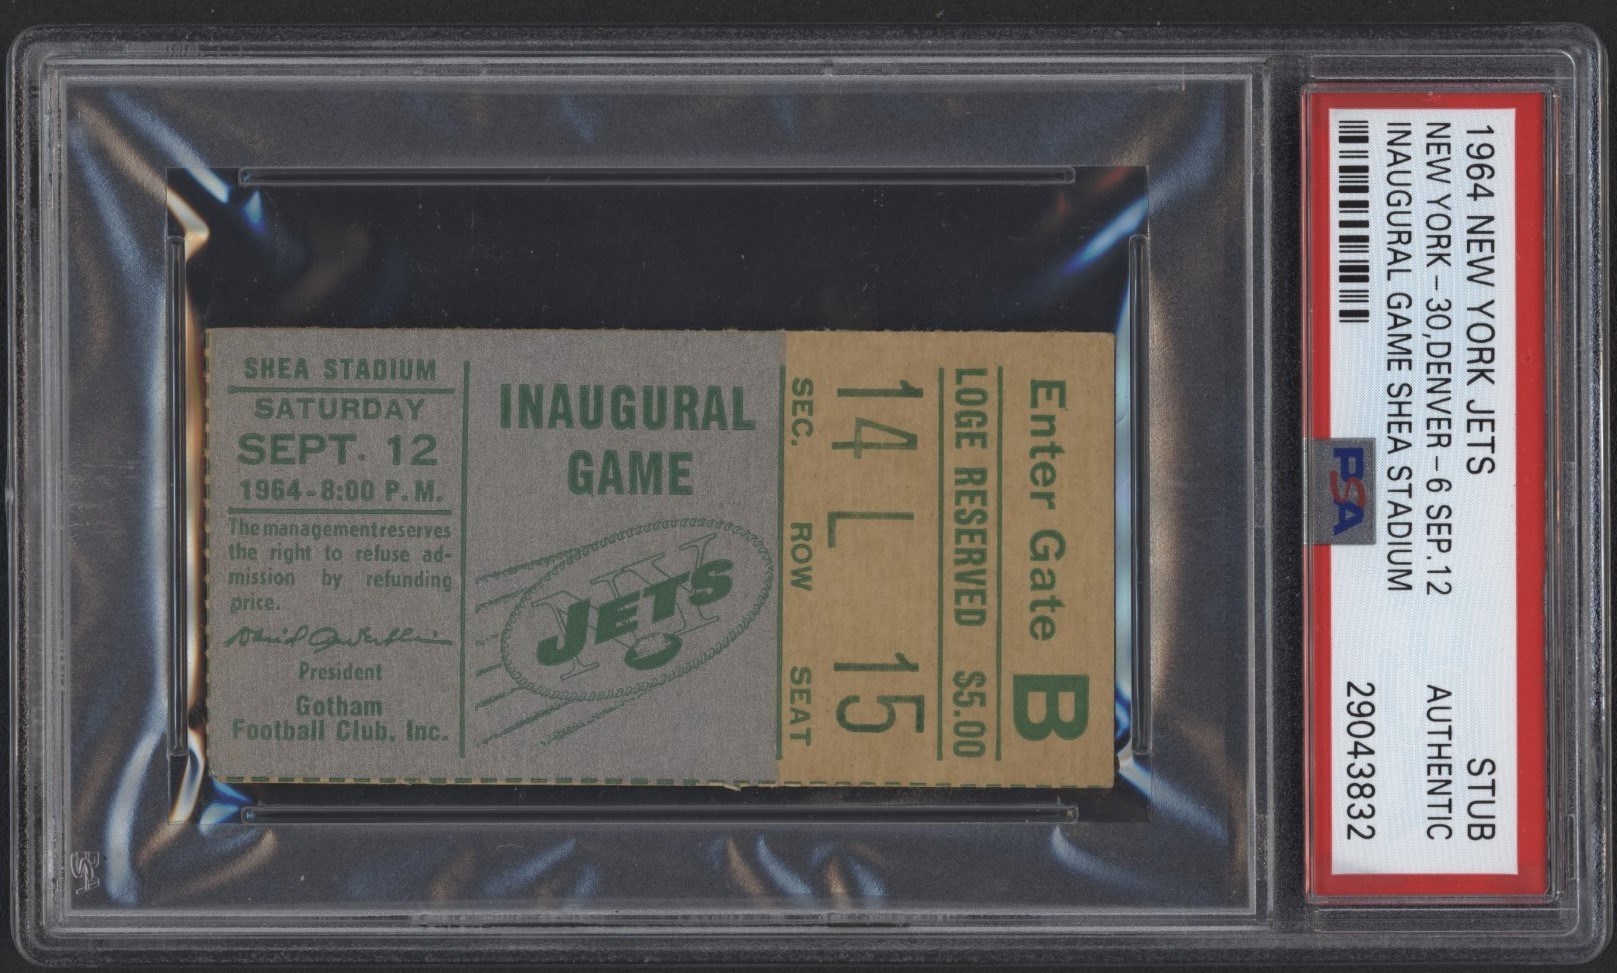 1964 New York Jets Inaugural Game at Shea Stadium Ticket Stub